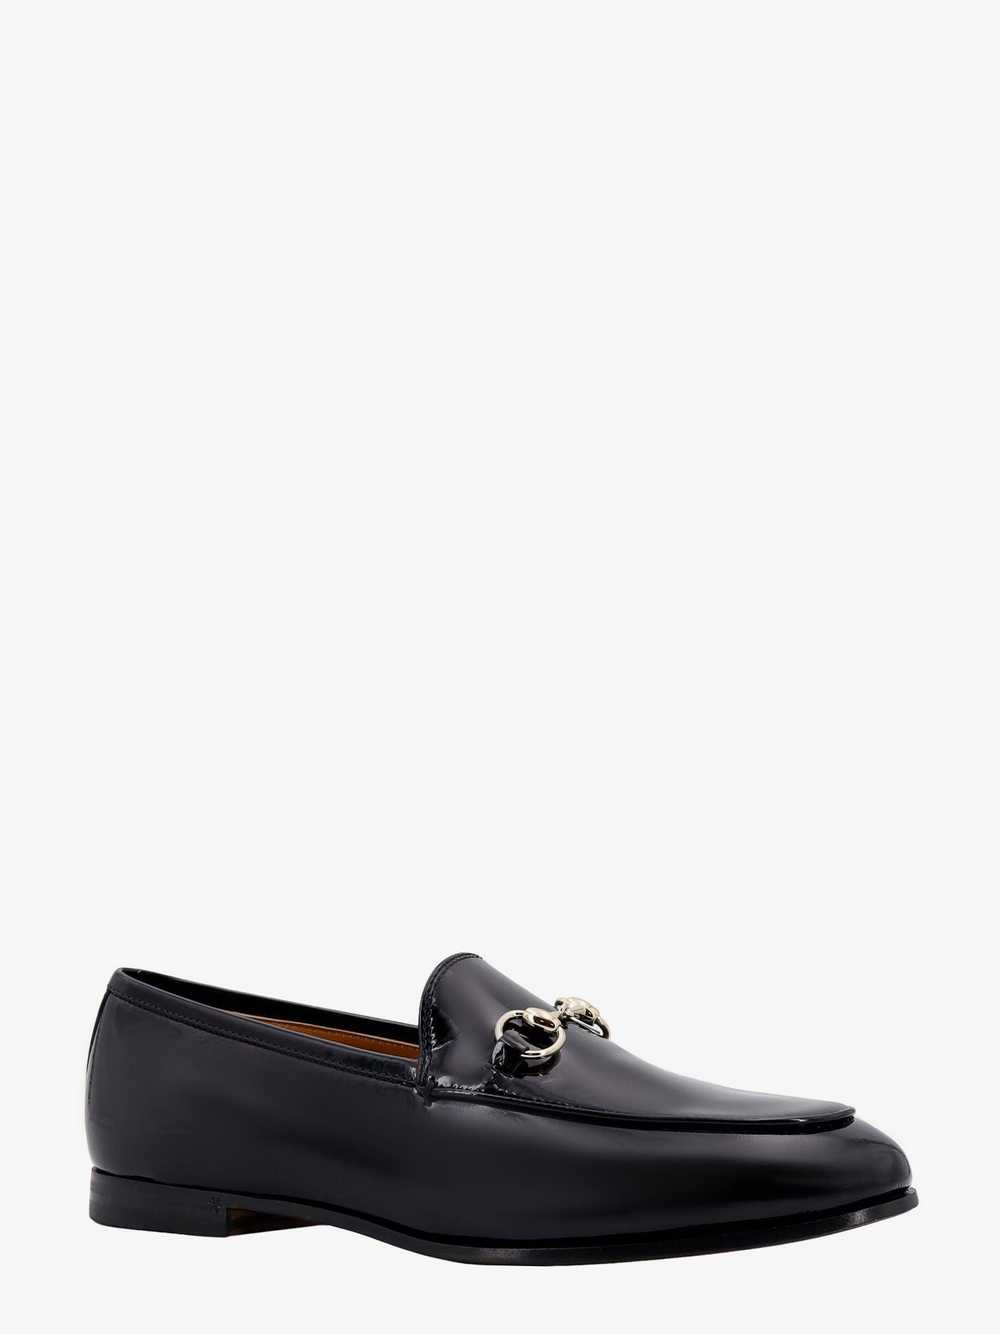 Gucci Jordaan Woman Black Loafers - image 2